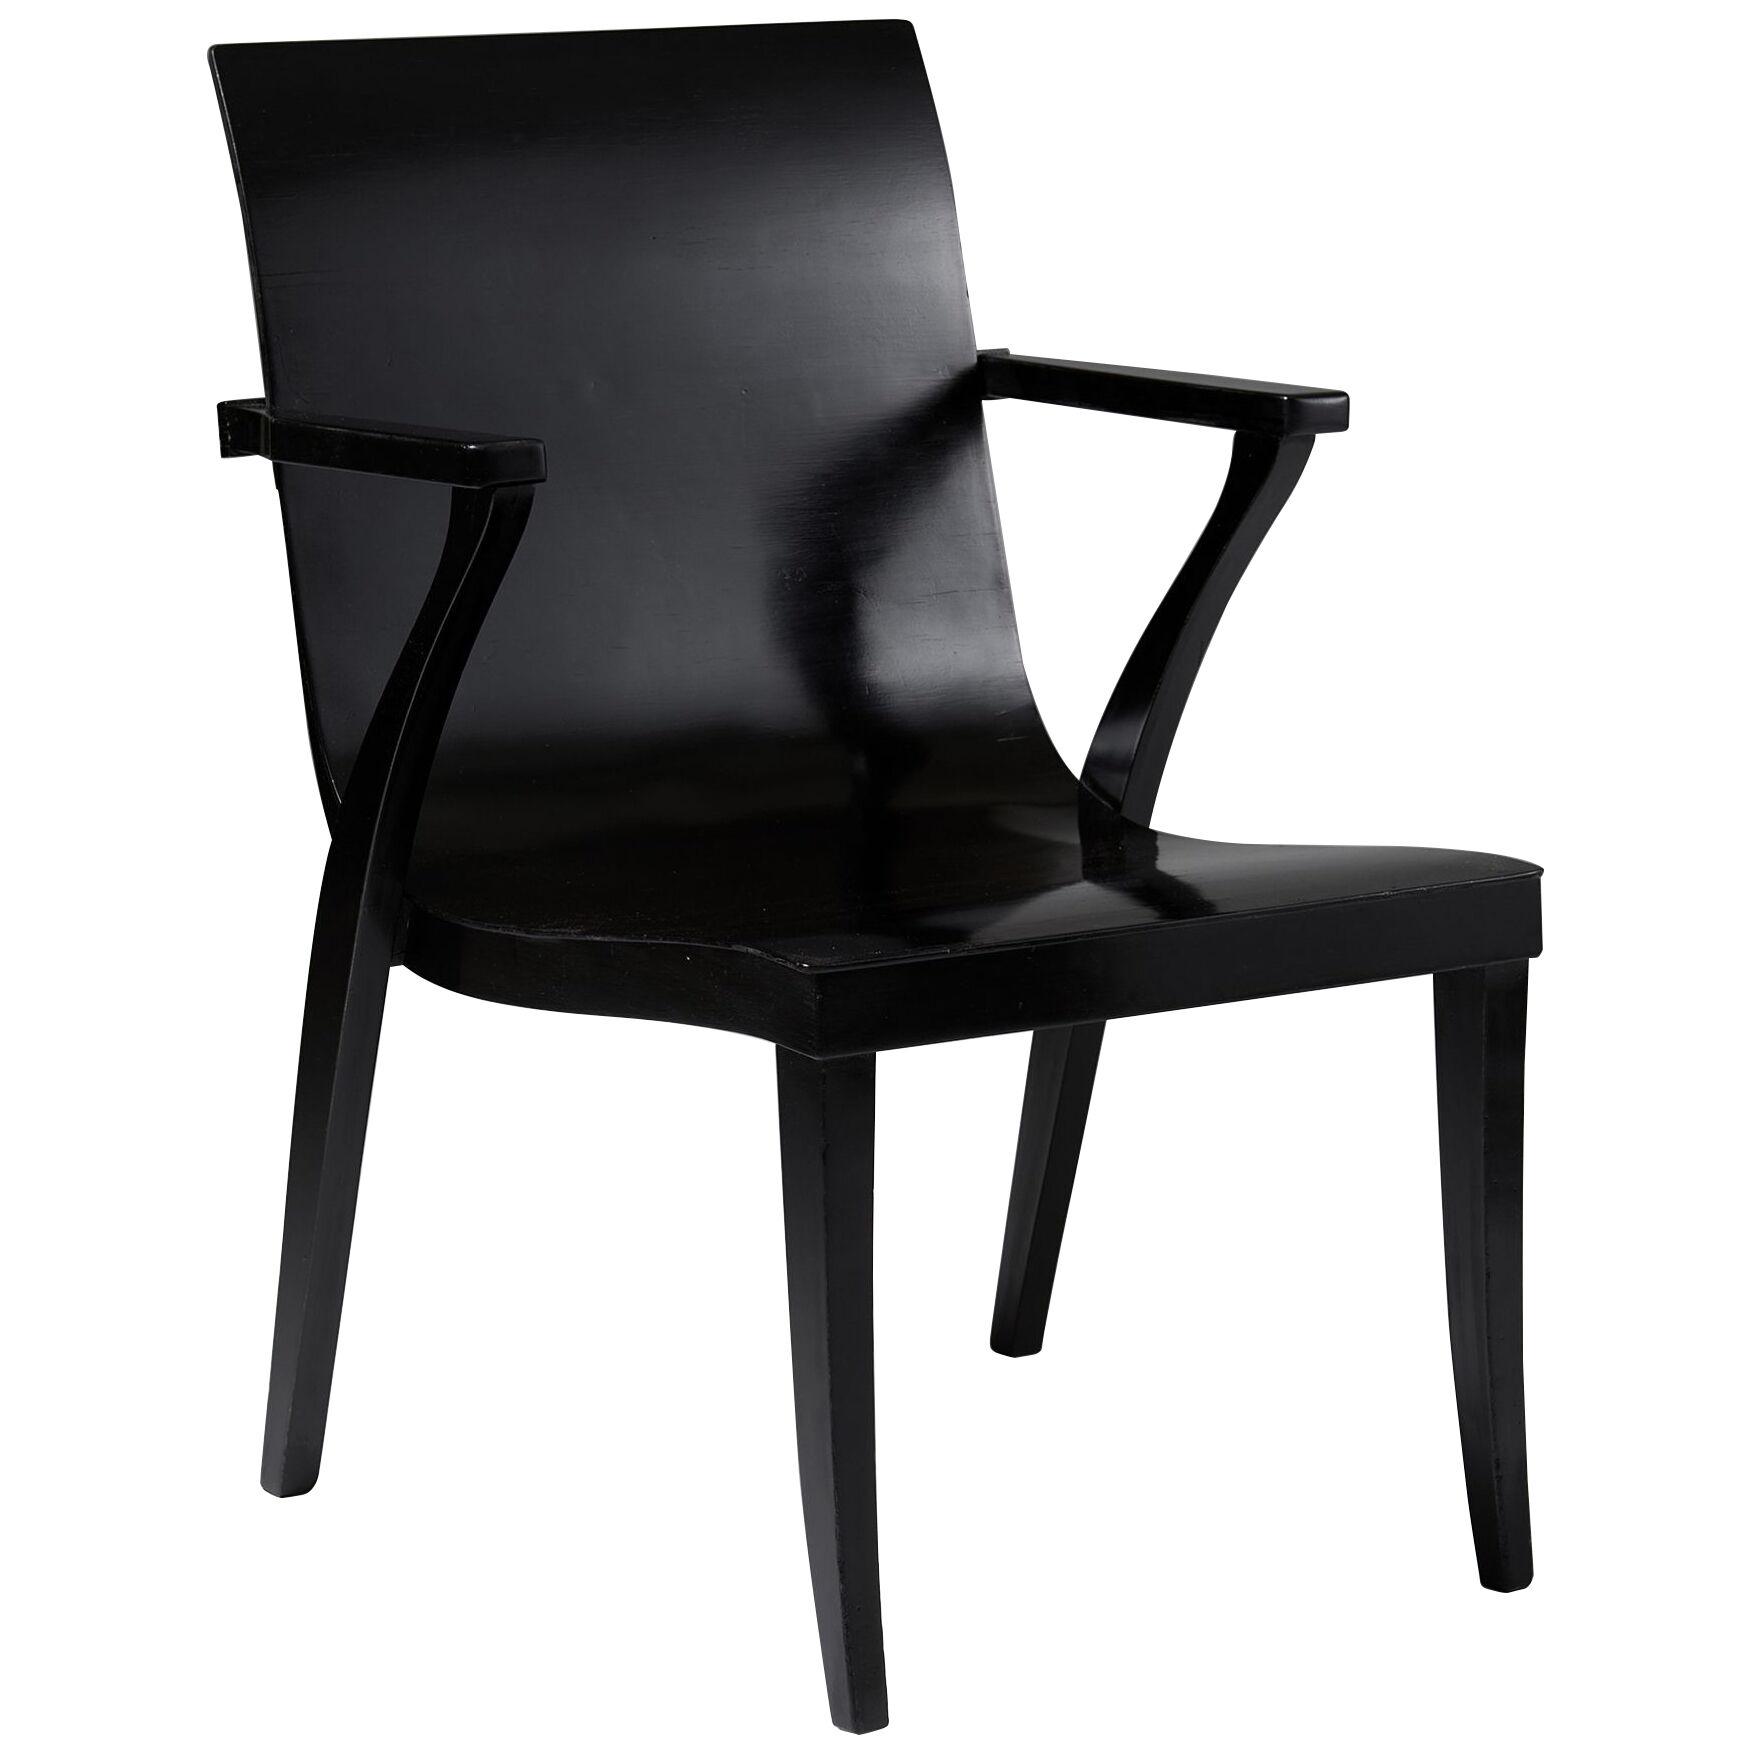 Armchair designed by Alvar Aalto